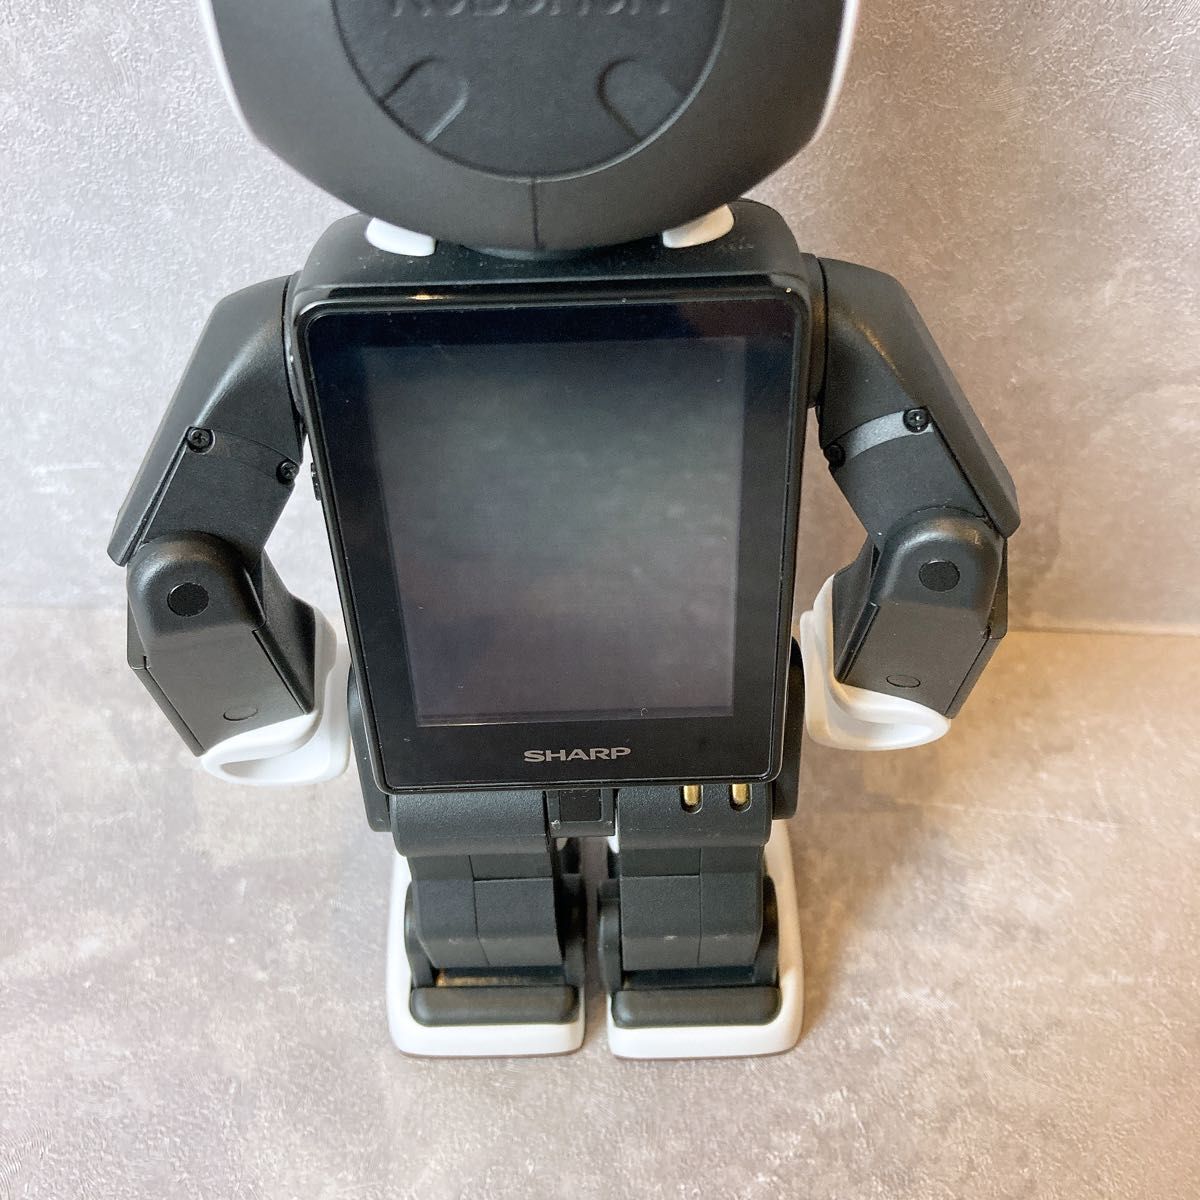 RoBoHoN Robot ho nSR-06M-T limitation Brown SHARP sharp charger owner manual attaching .